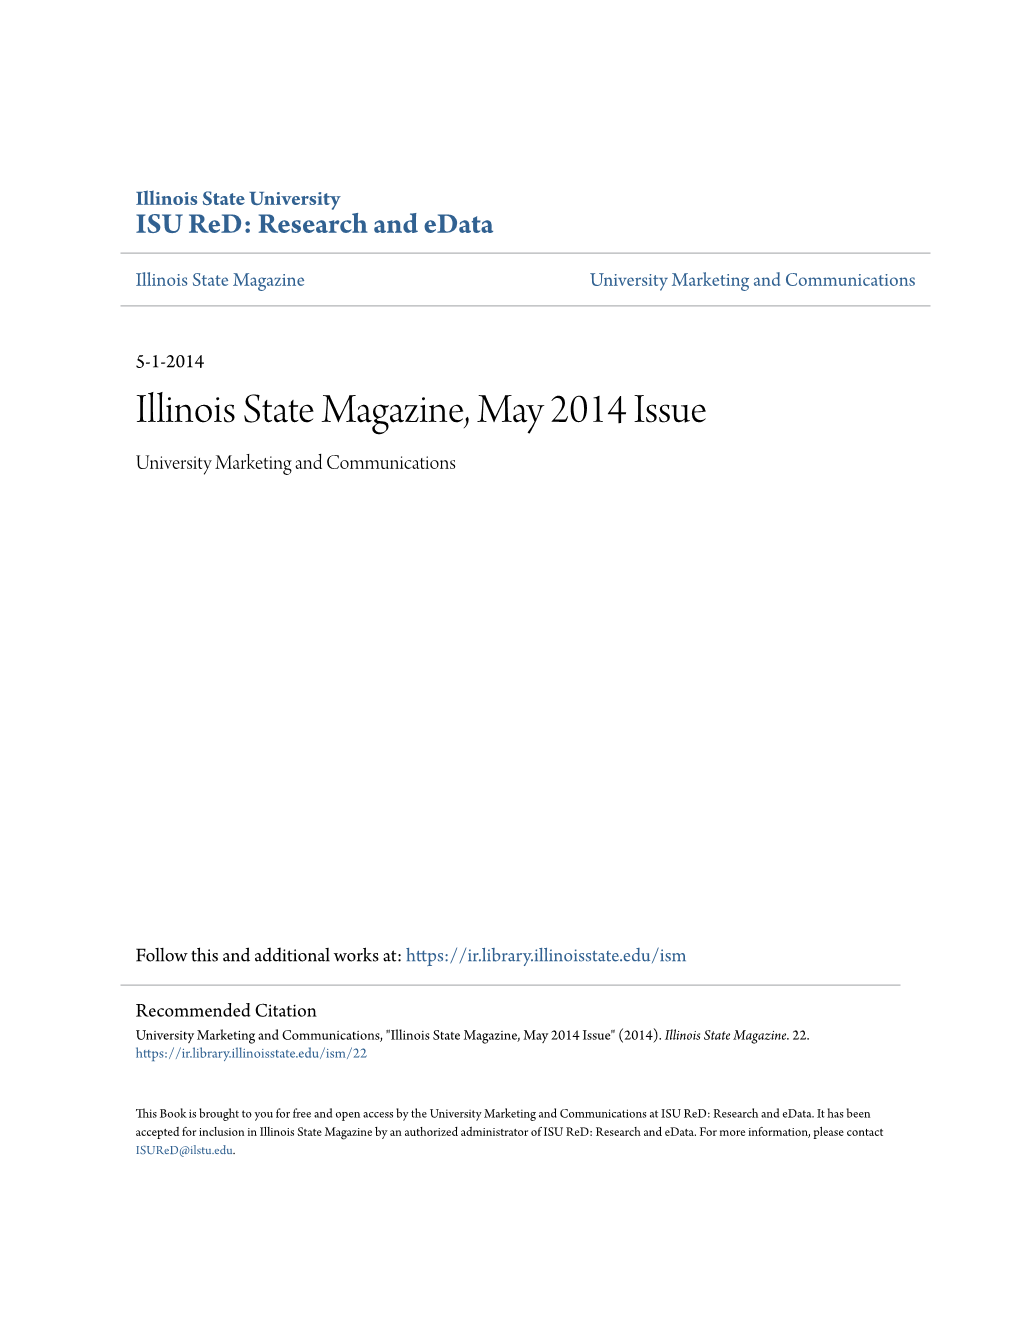 Illinois State Magazine, May 2014 Issue University Marketing and Communications